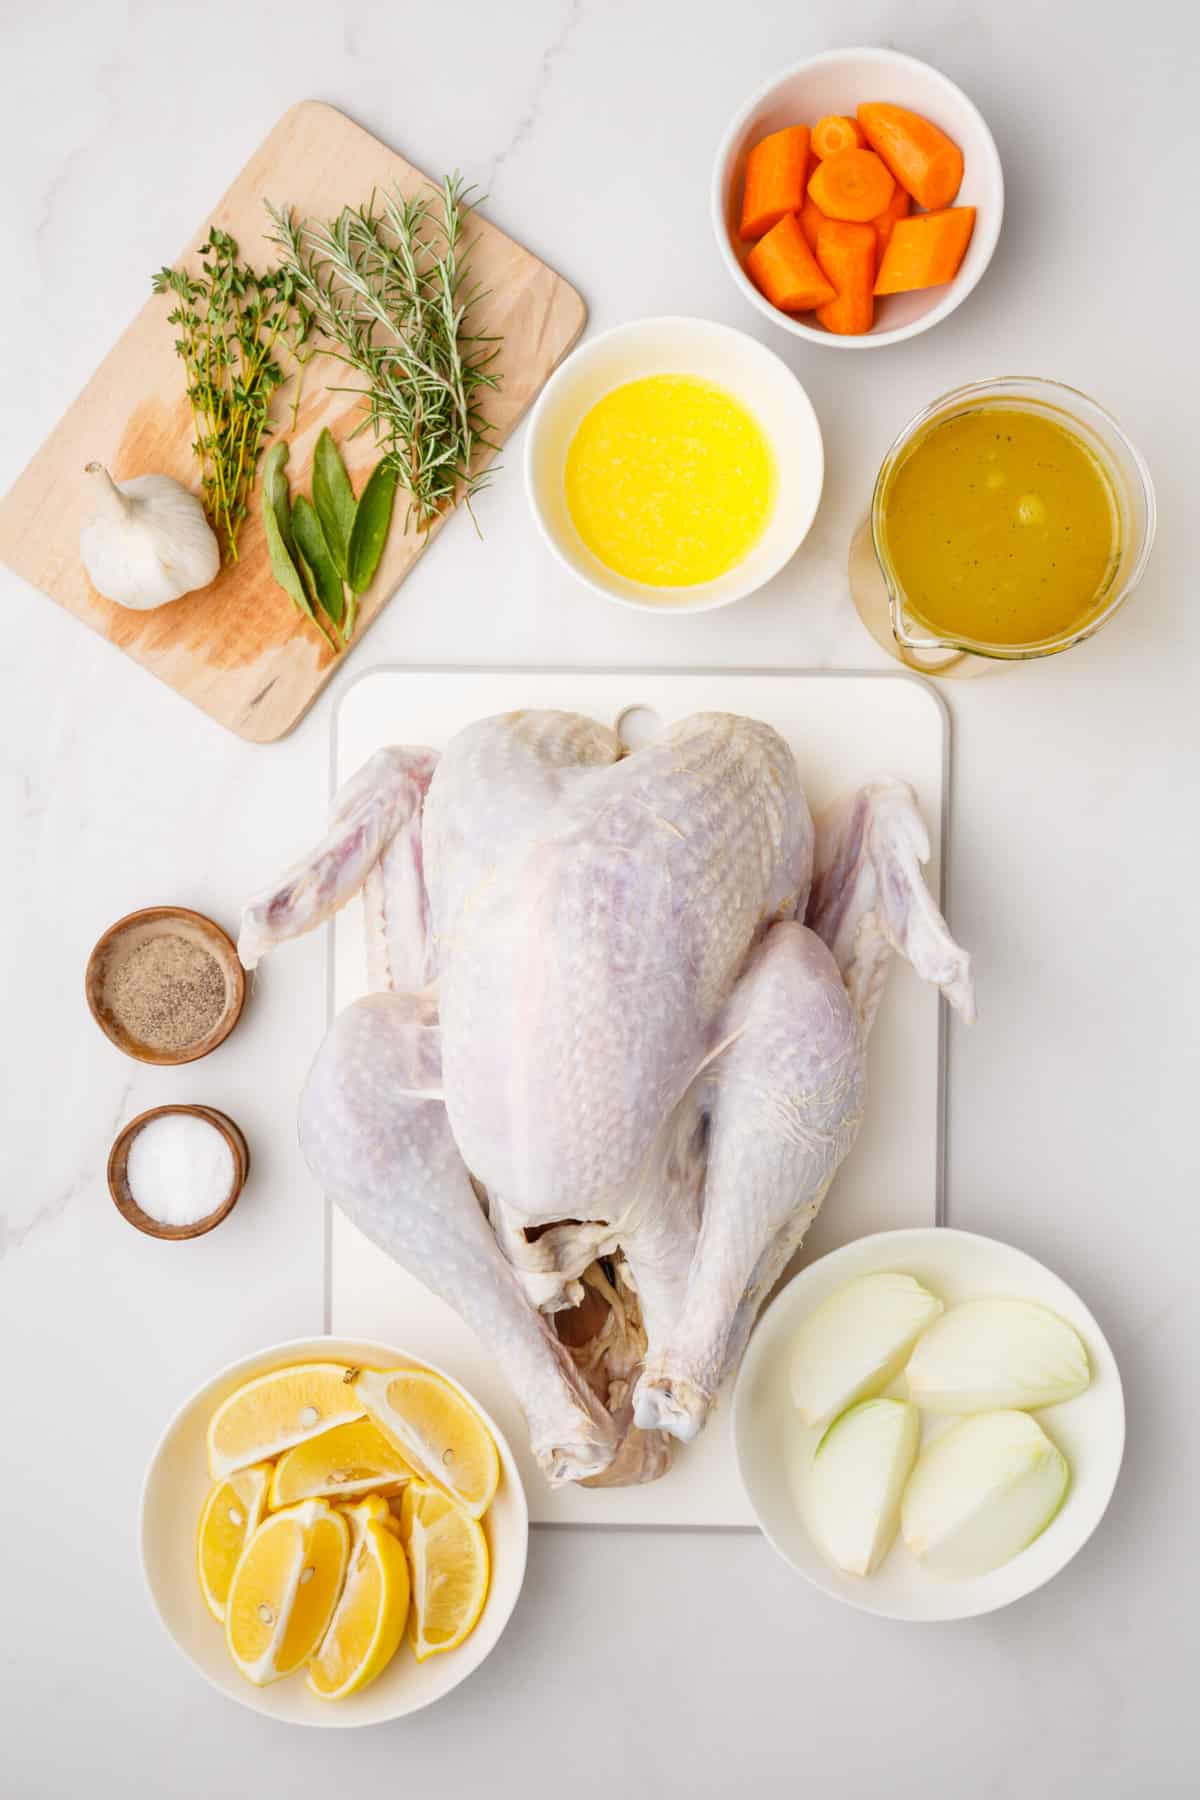 ingredients to make roasted turkey